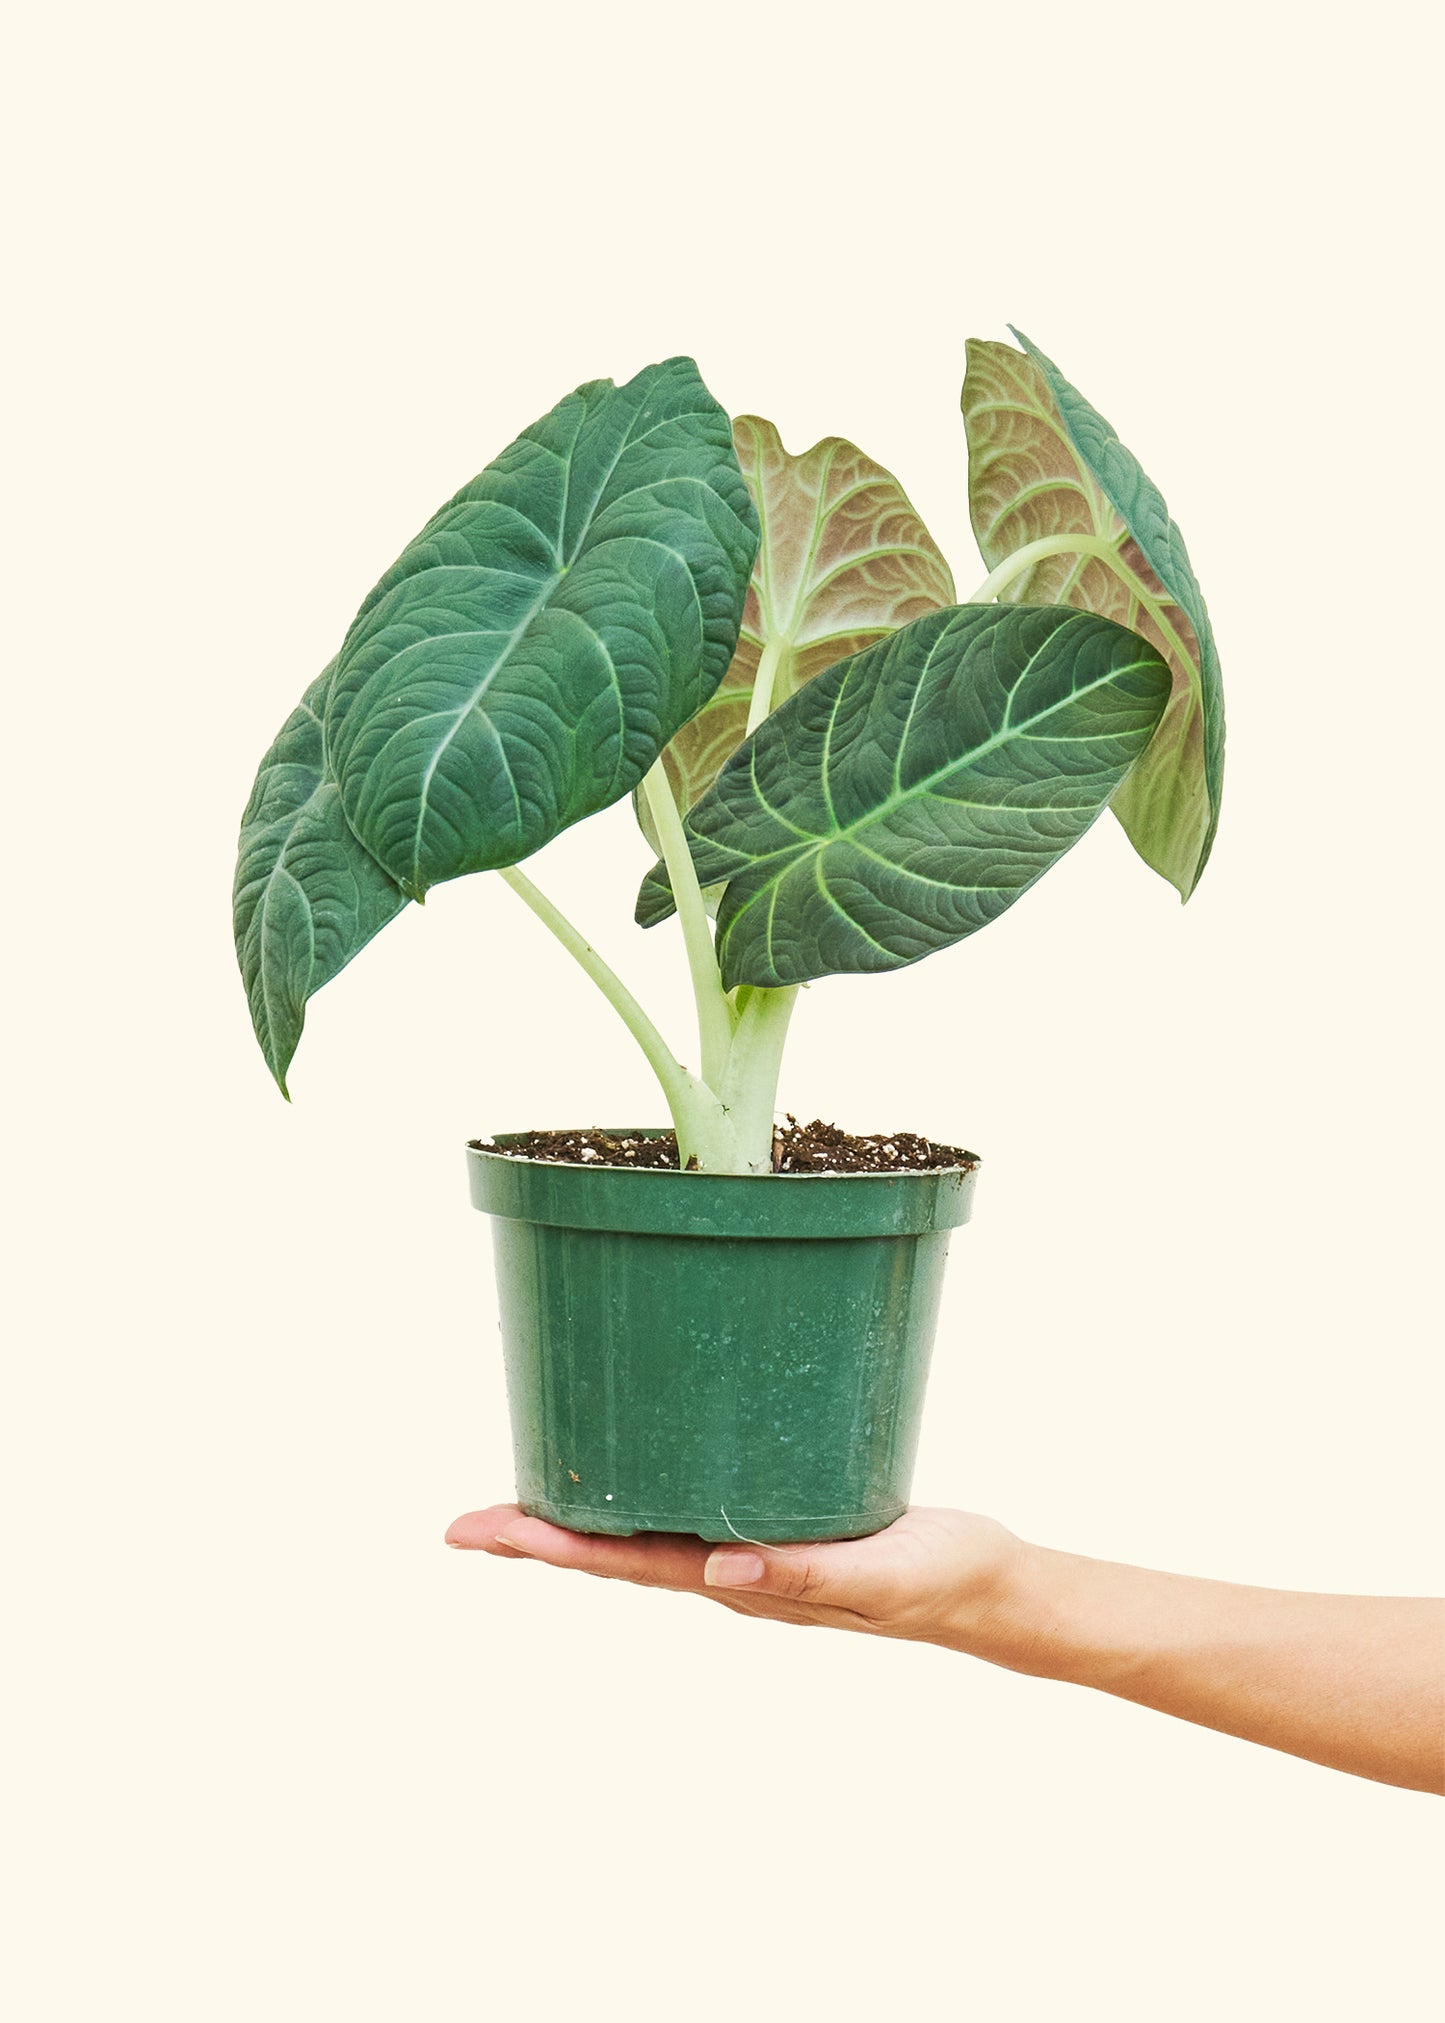 6" Alocasia maharani in a grow pot.